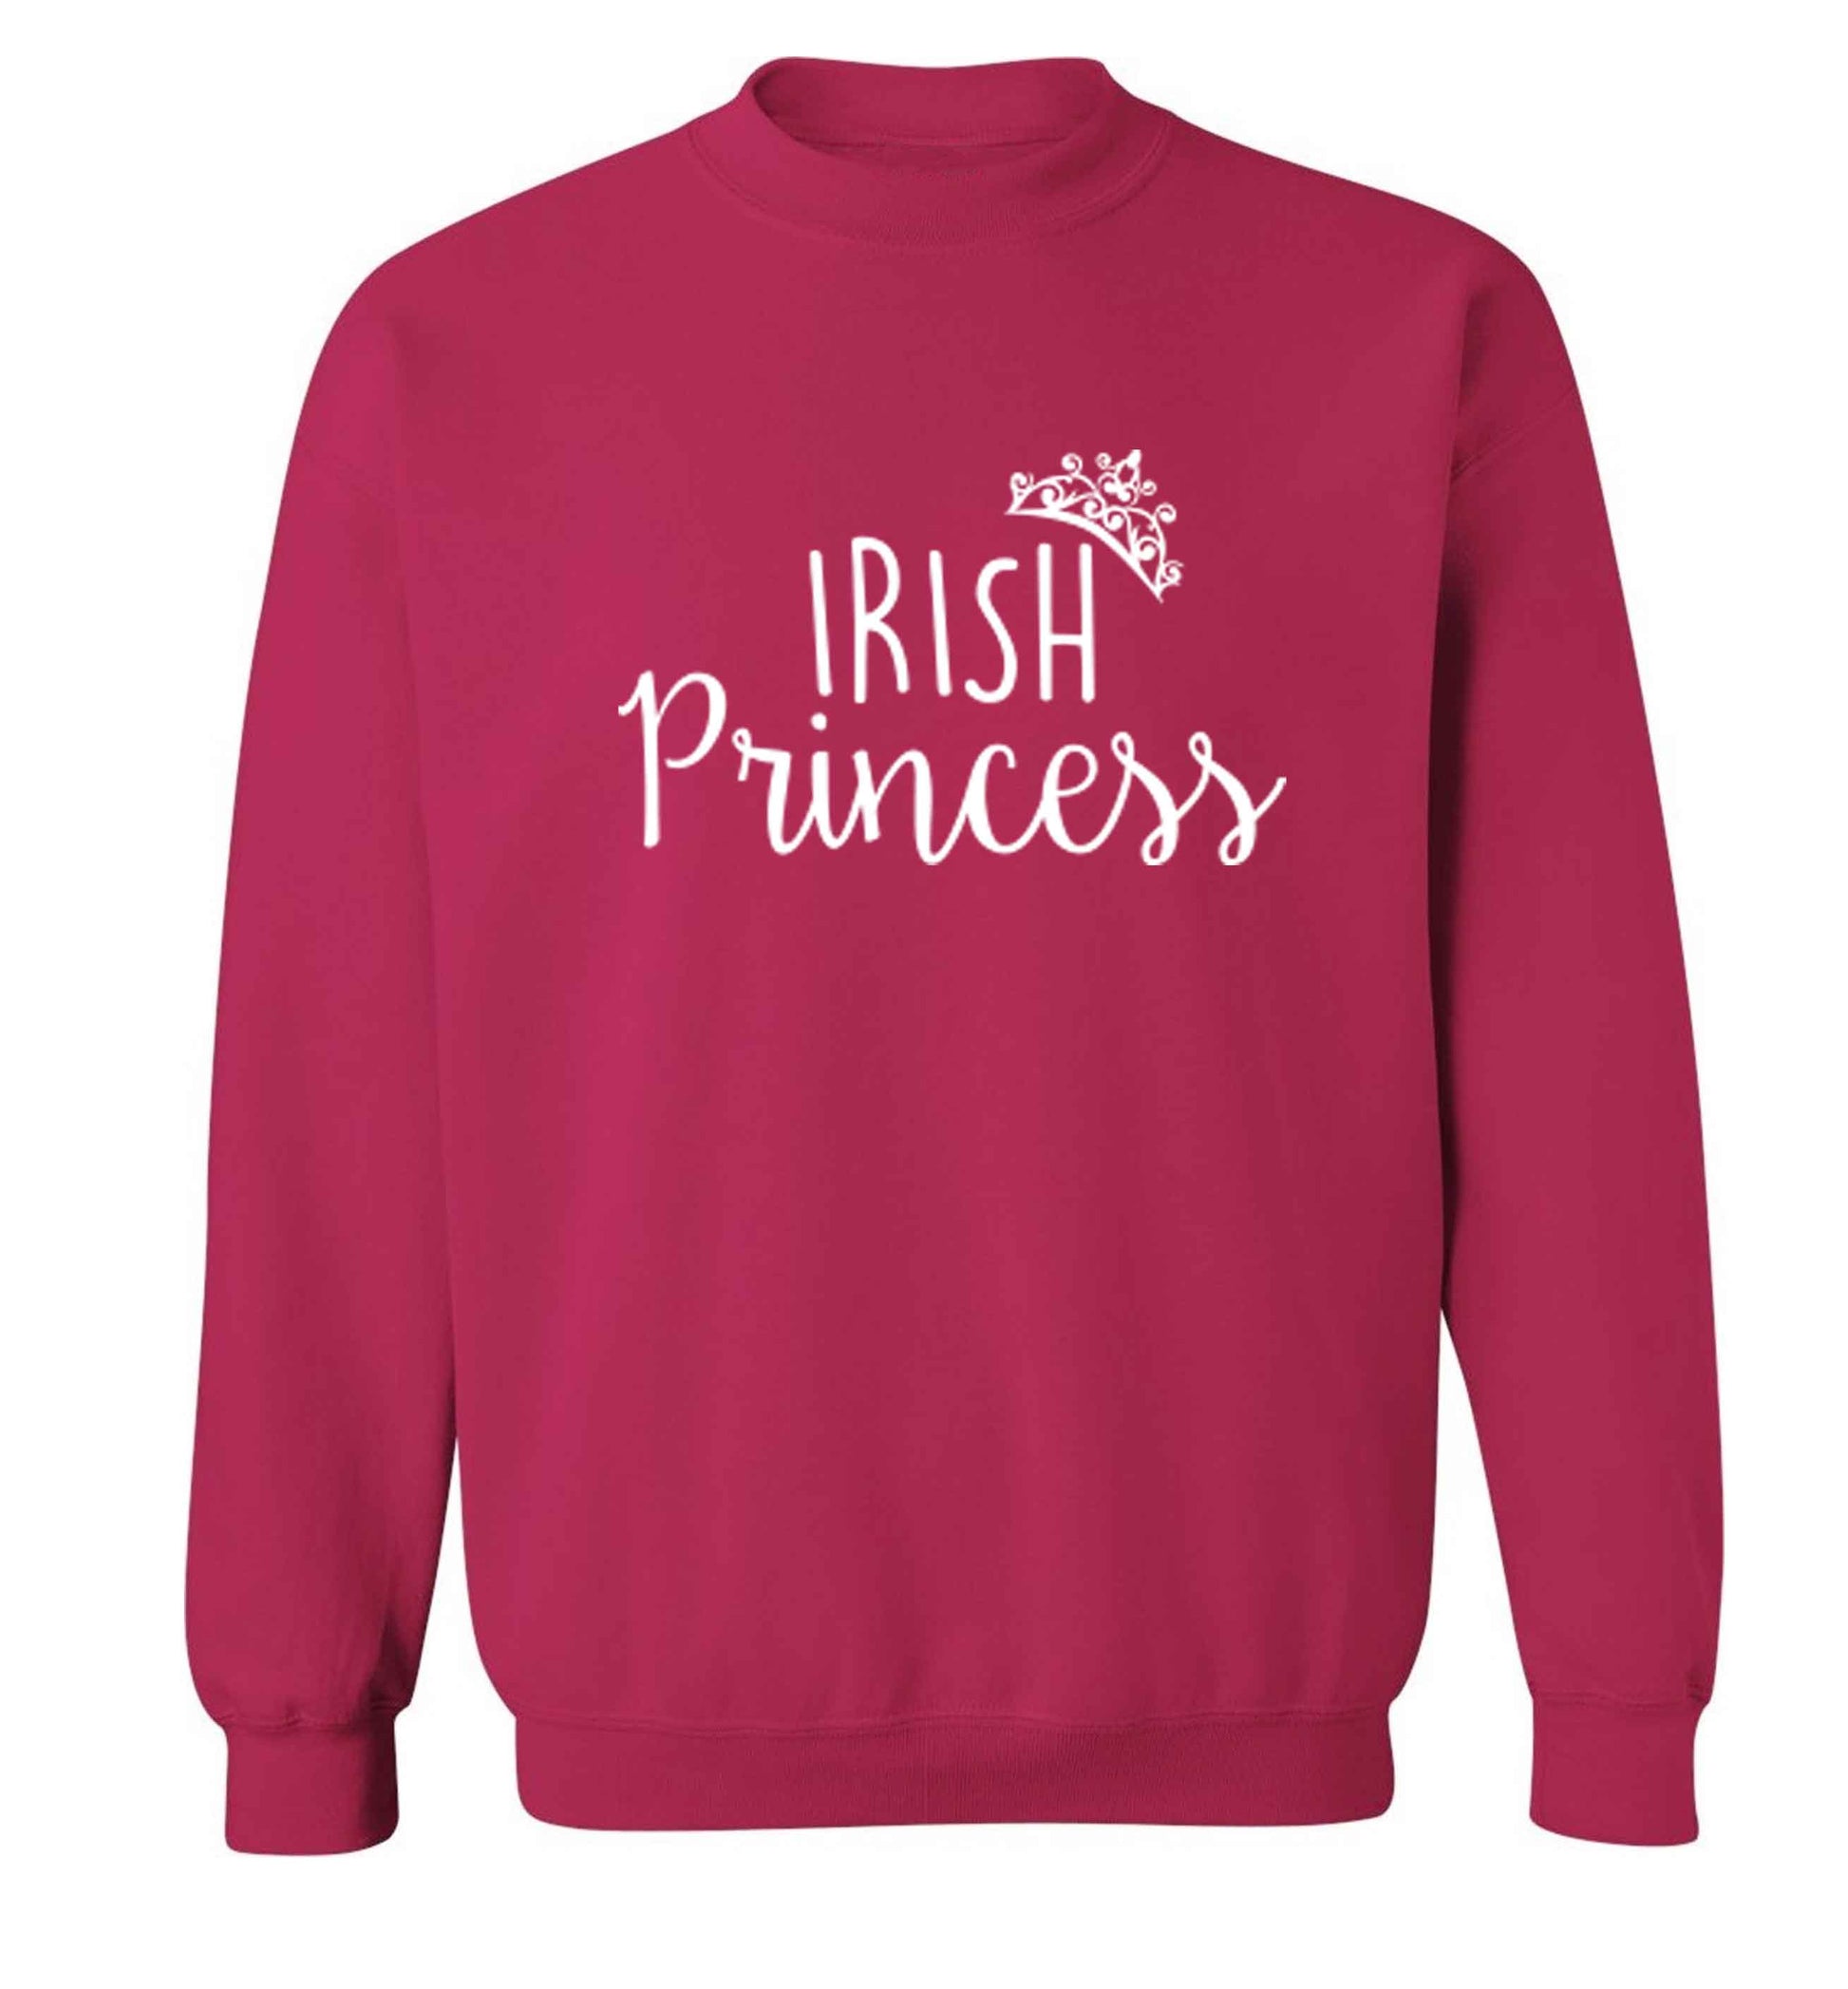 Irish princess adult's unisex pink sweater 2XL